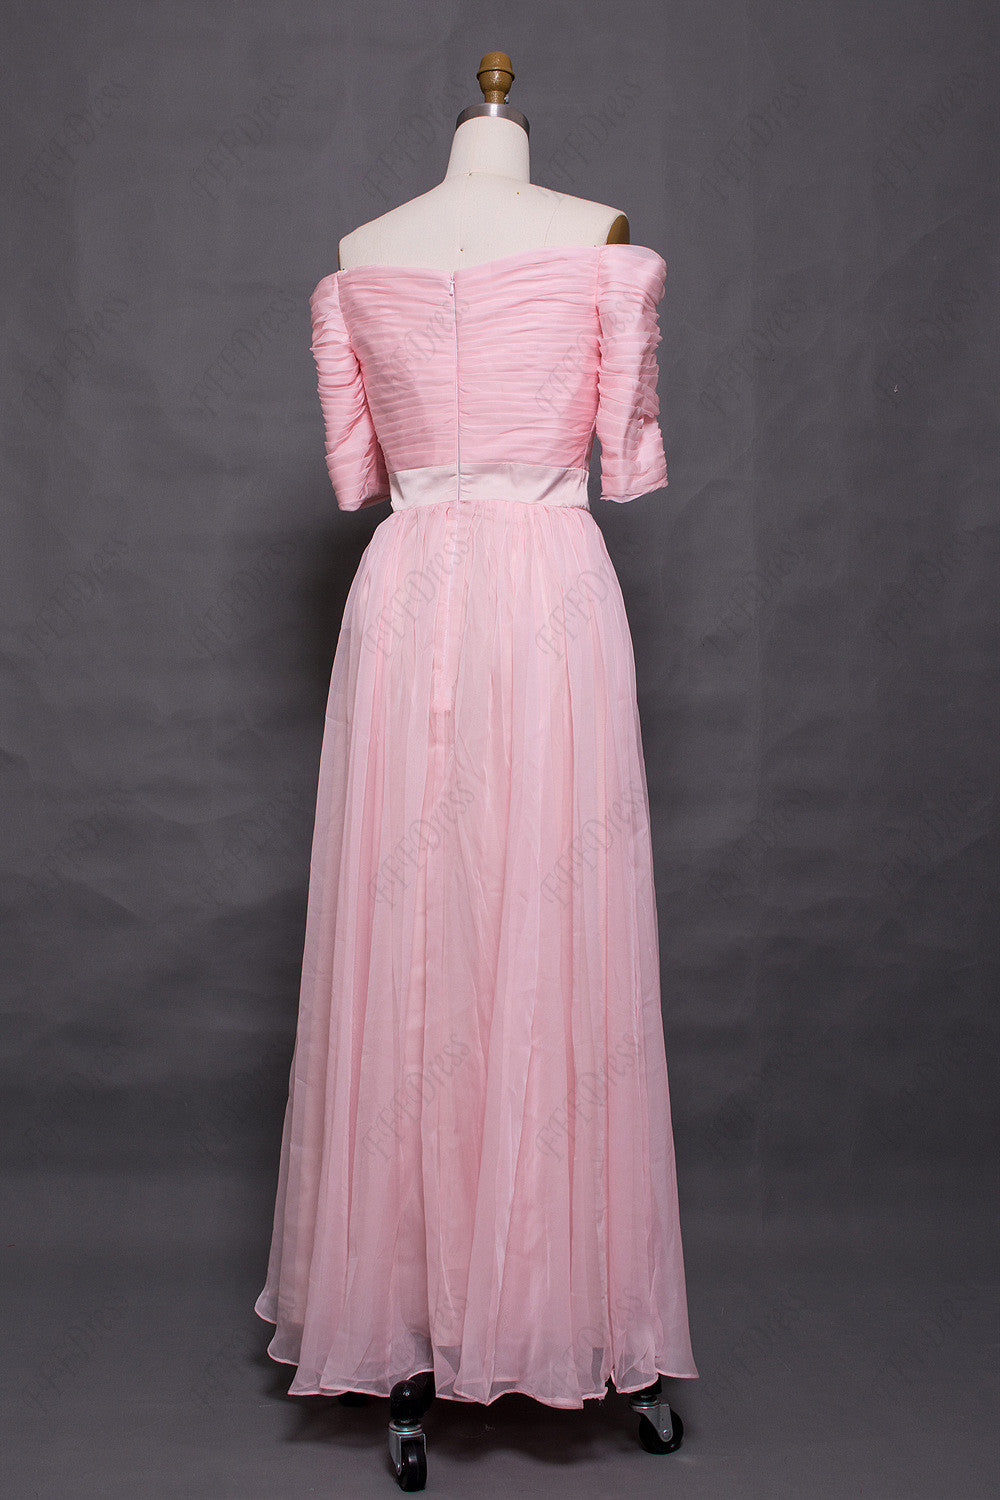 Pink modest prom dress with sleeves vintage off the shoulder evening dress